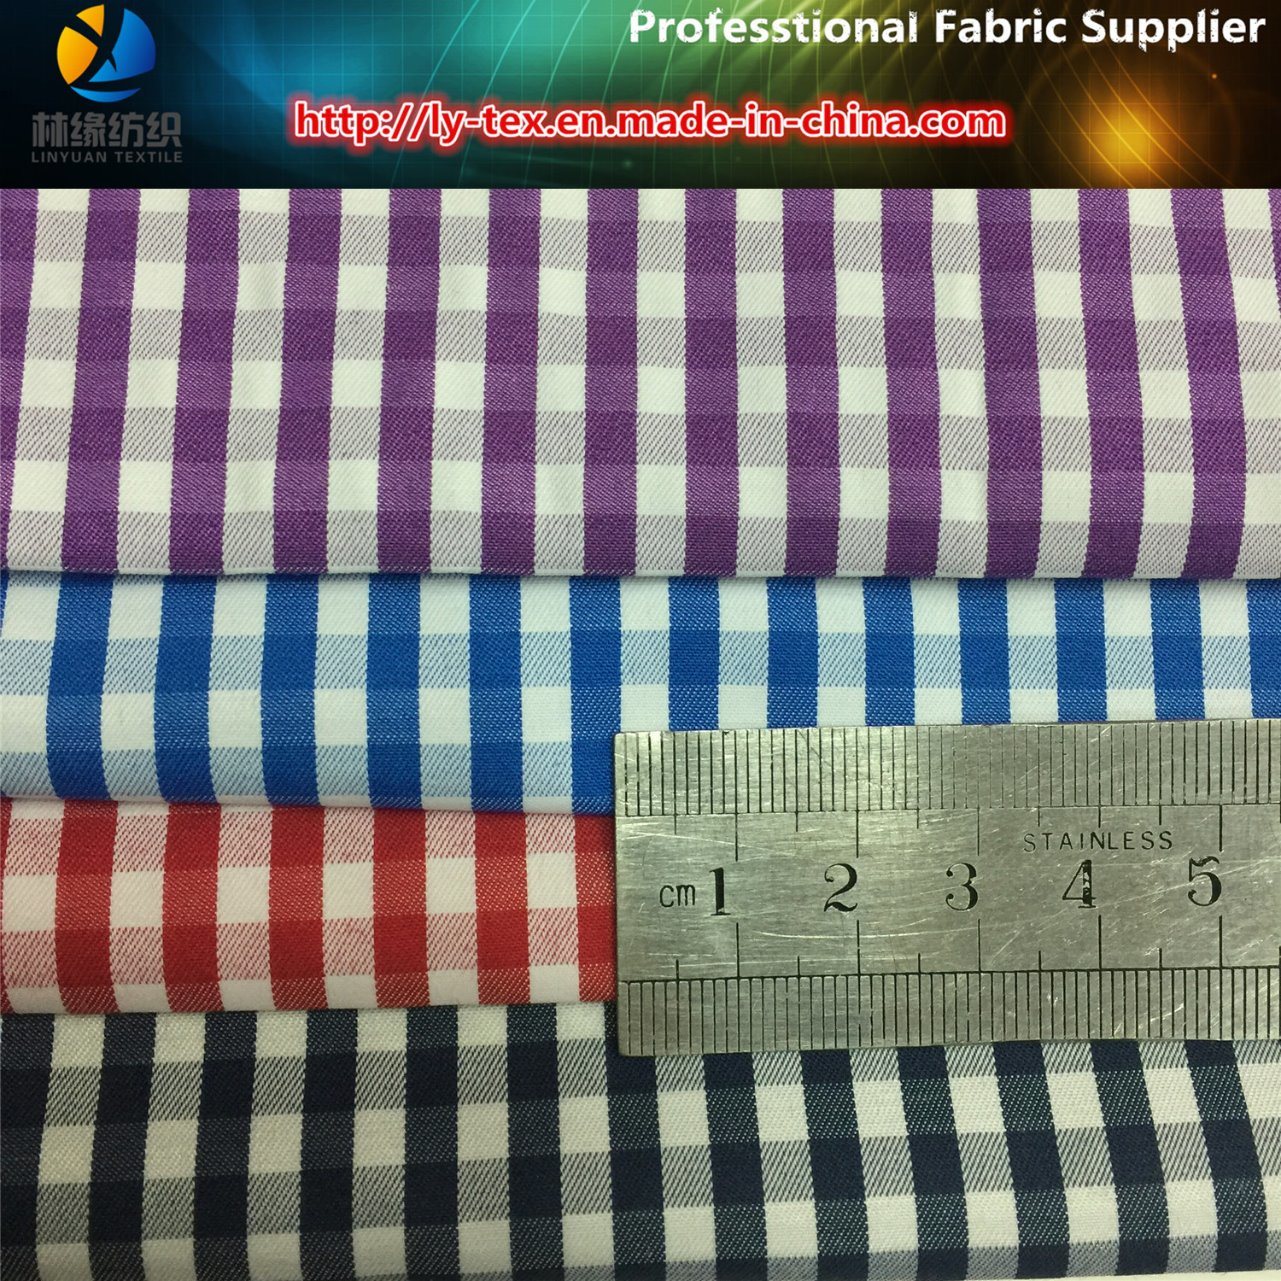 T/C Shirt Fabric, Yarn Dyed Check Fabric for Shirt